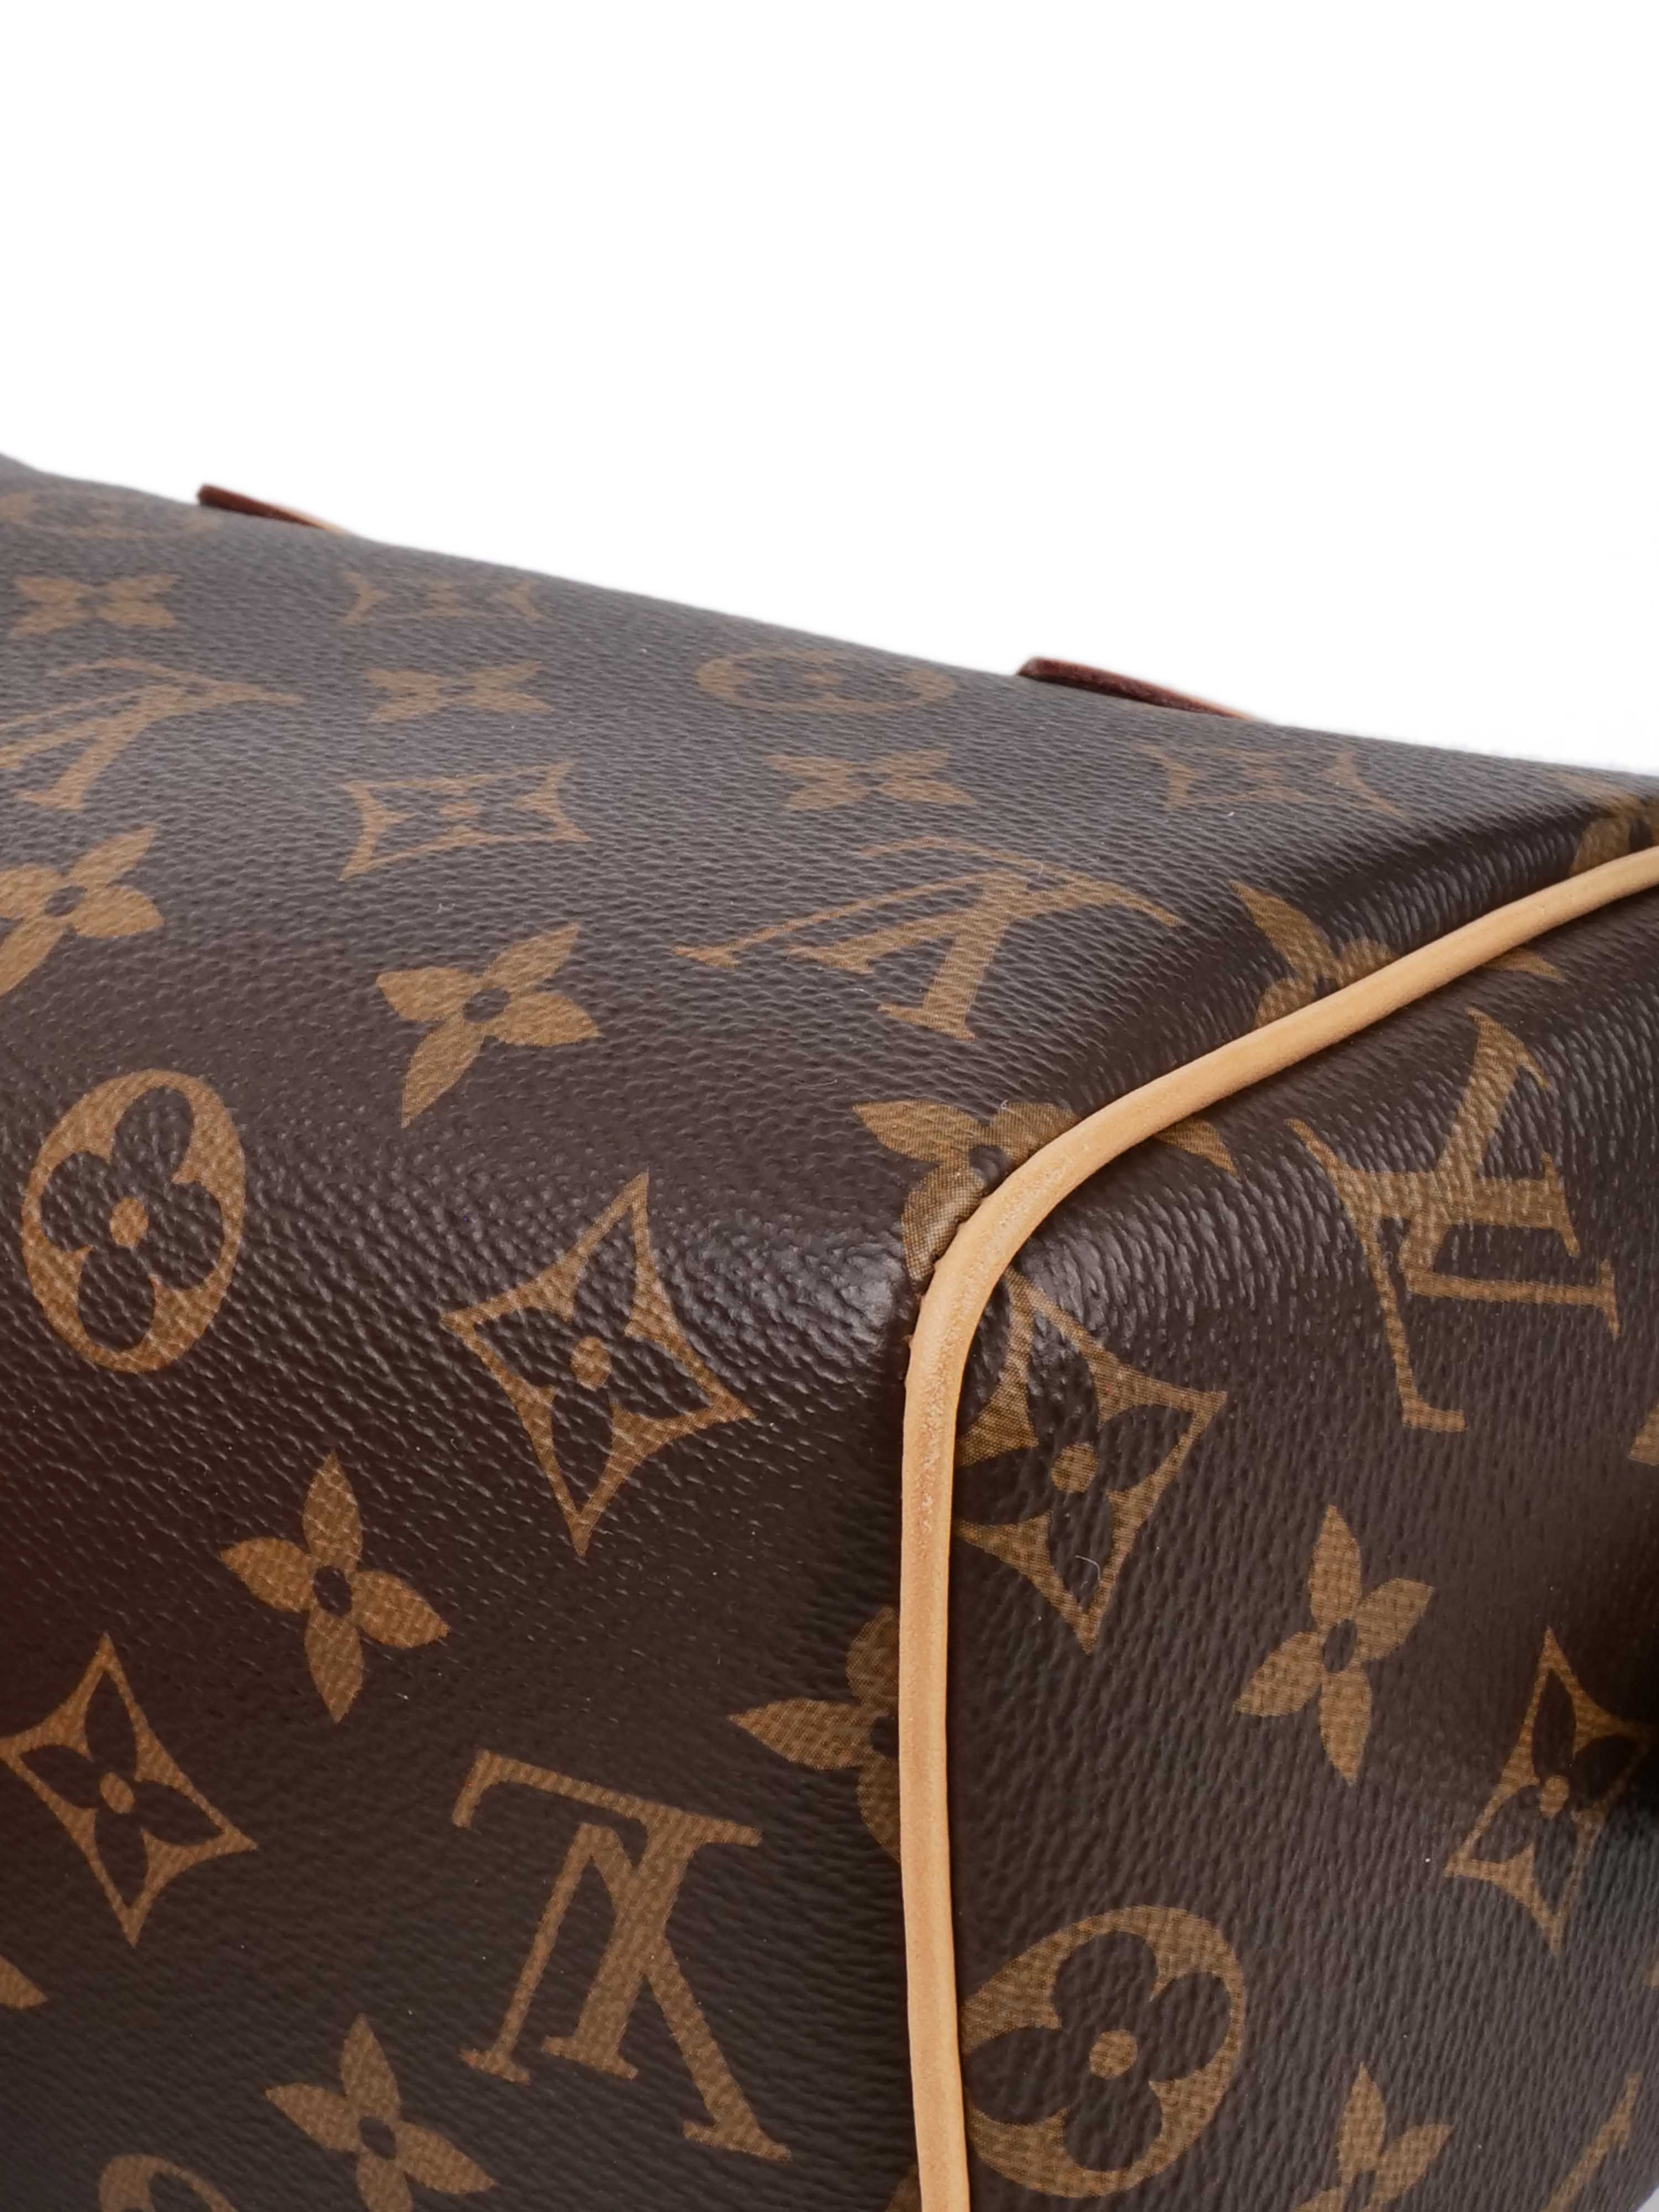 Louis Vuitton Monogram Speedy 20 Bag.